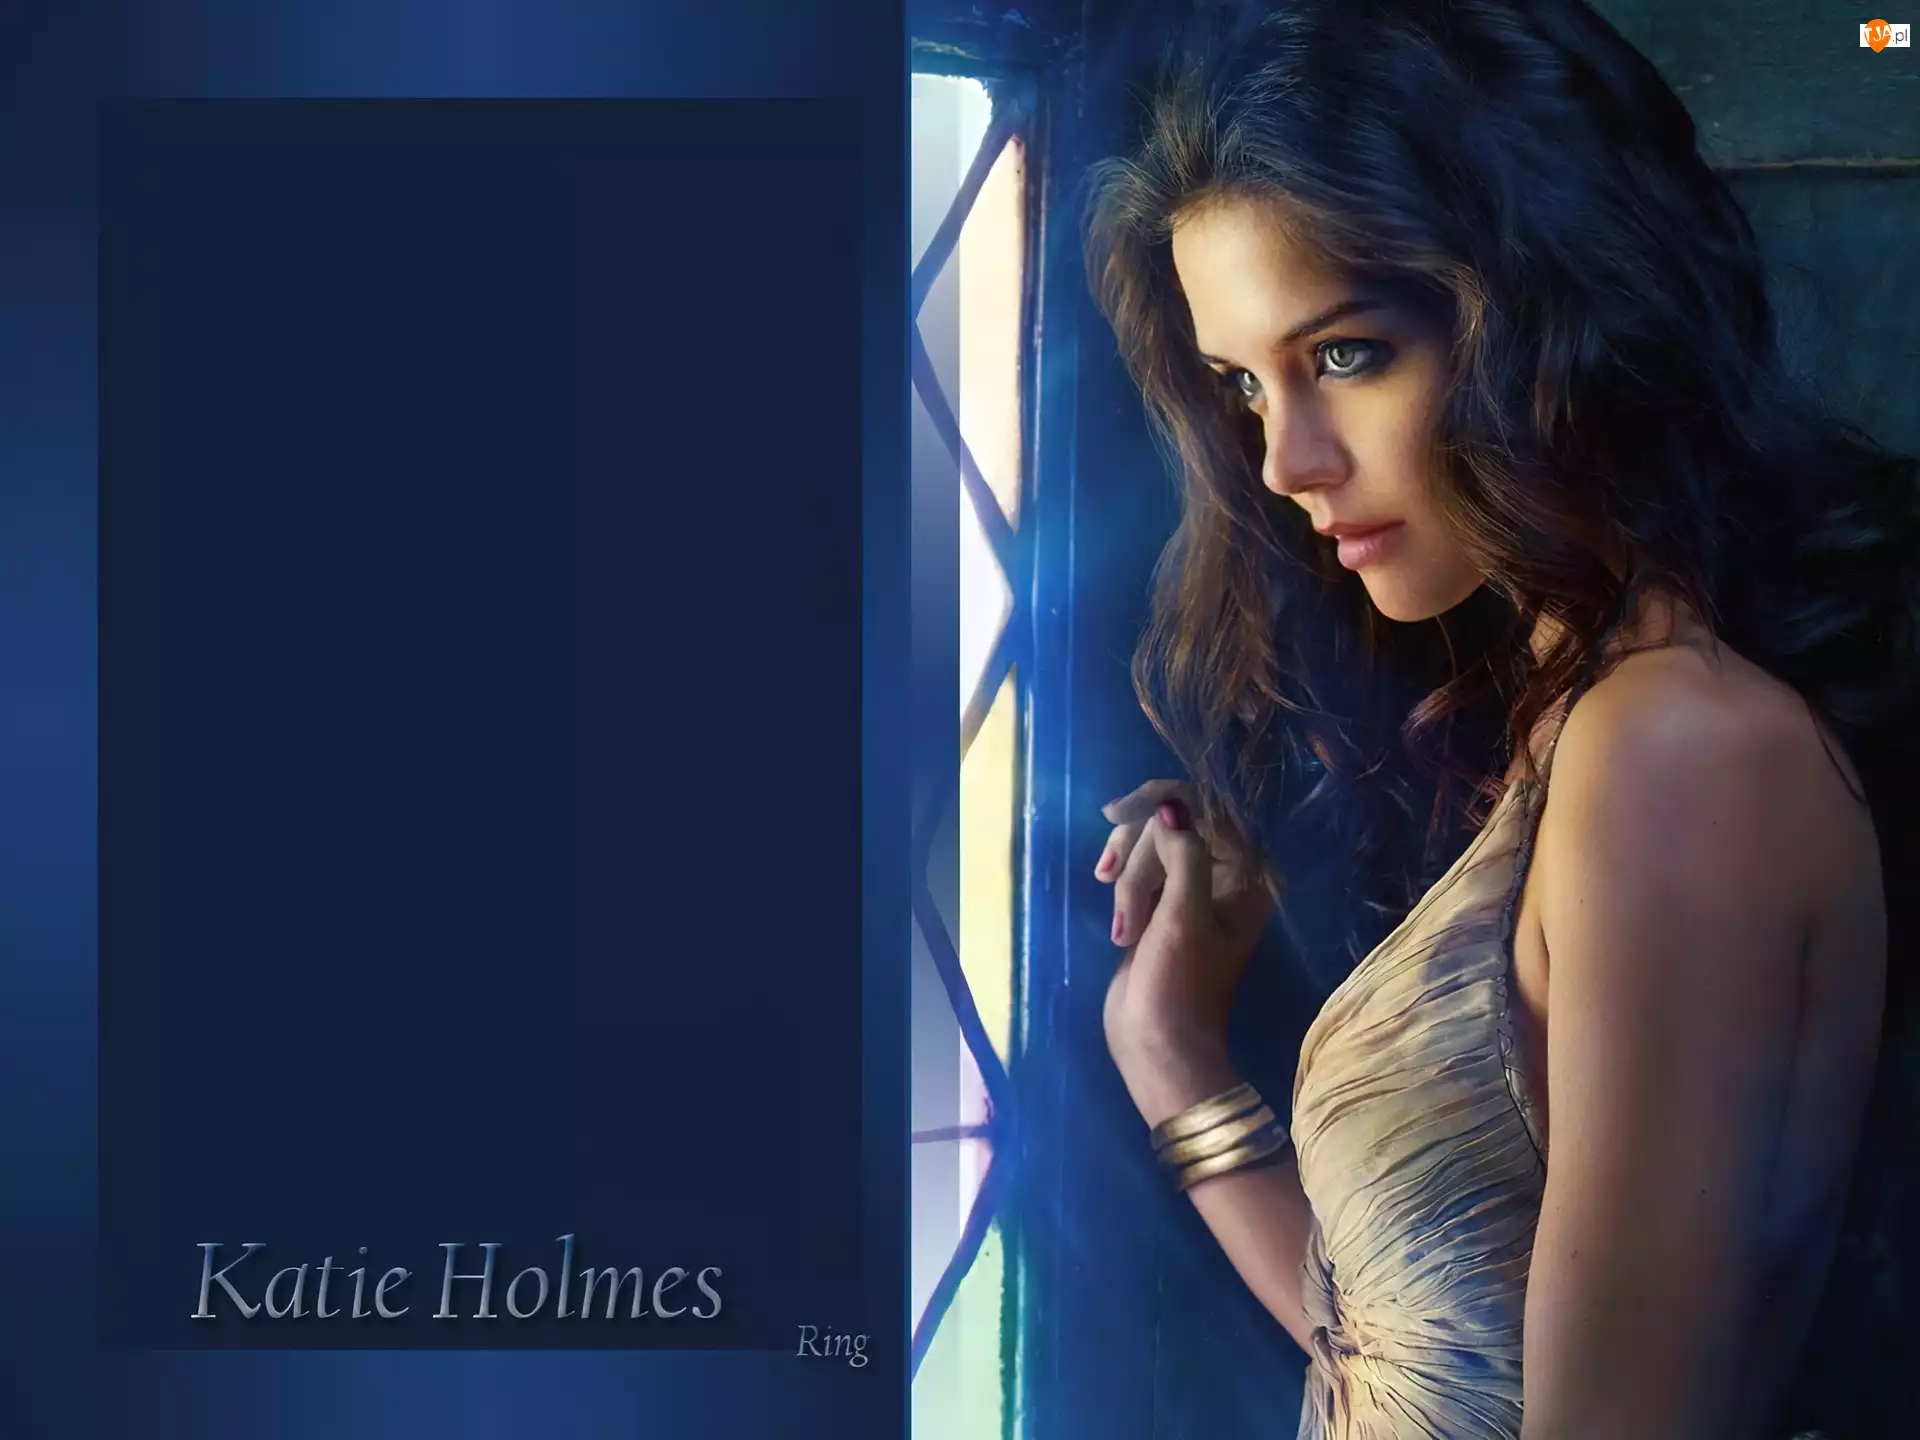 Katie Holmes